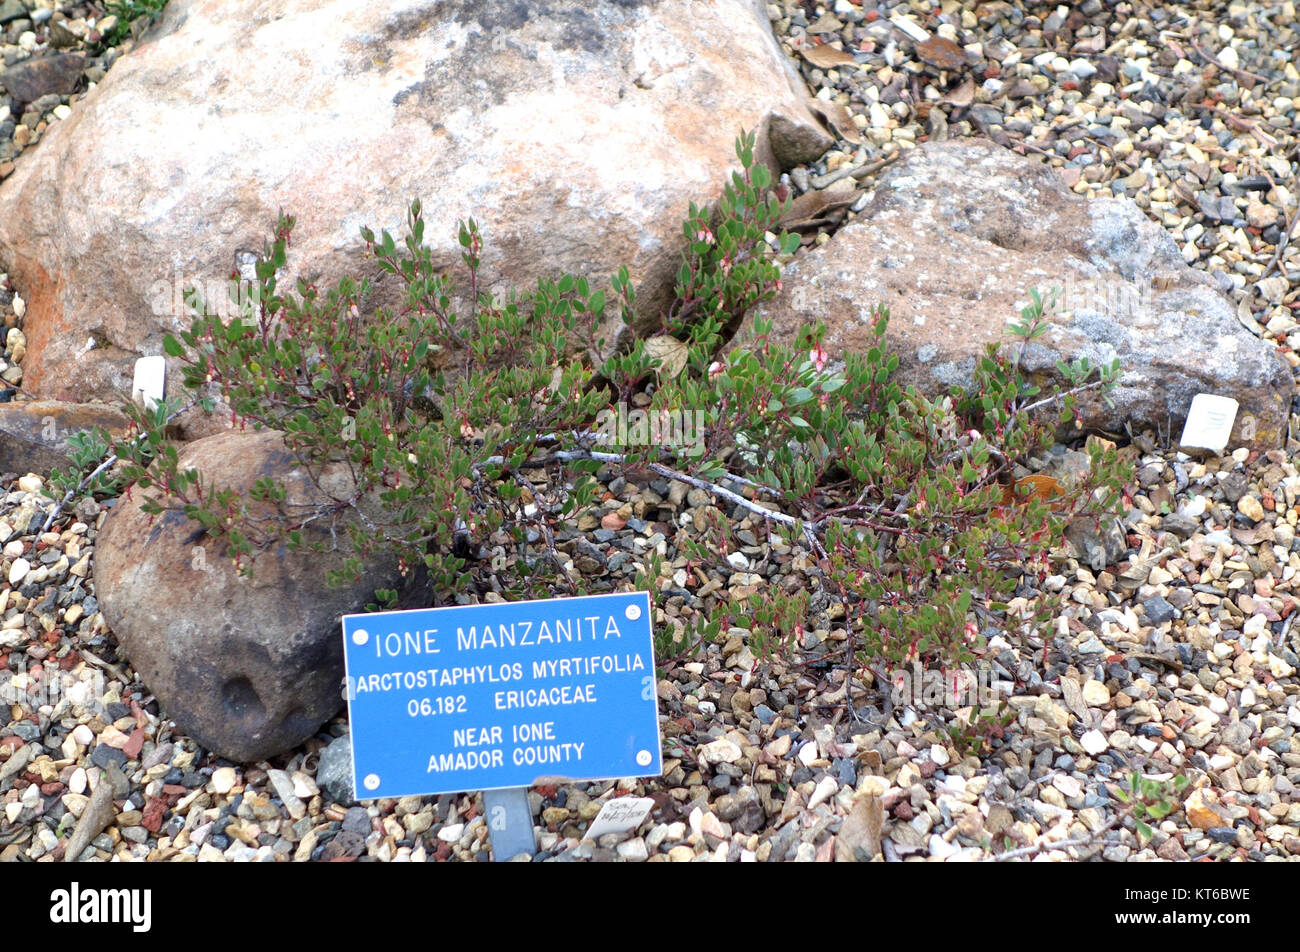 Arctostaphylos myrtifolia - Regional Parks Botanic Garden, Berkeley, CA - DSC04313 Stock Photo